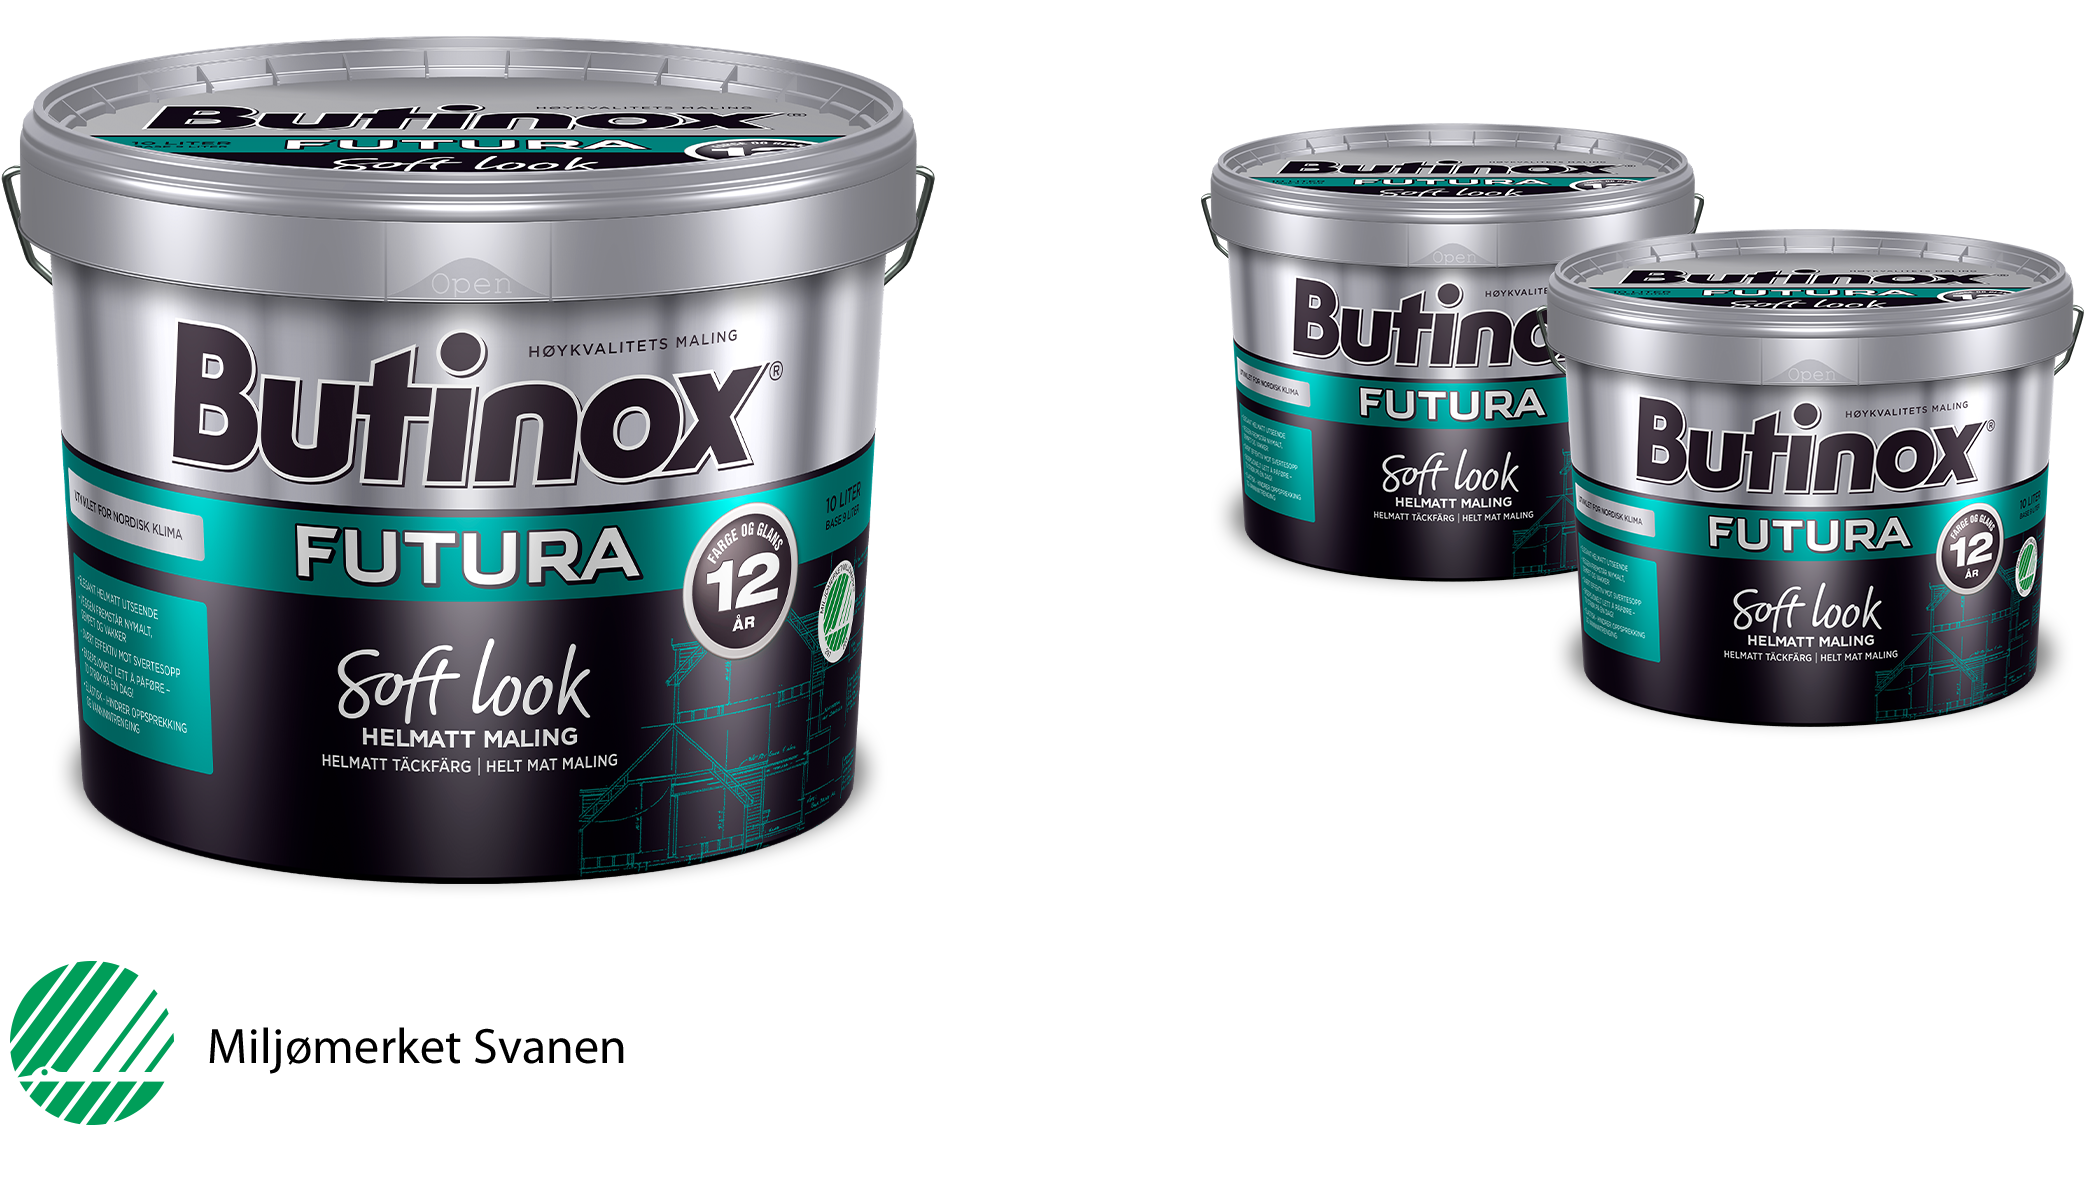 Butinox Futura